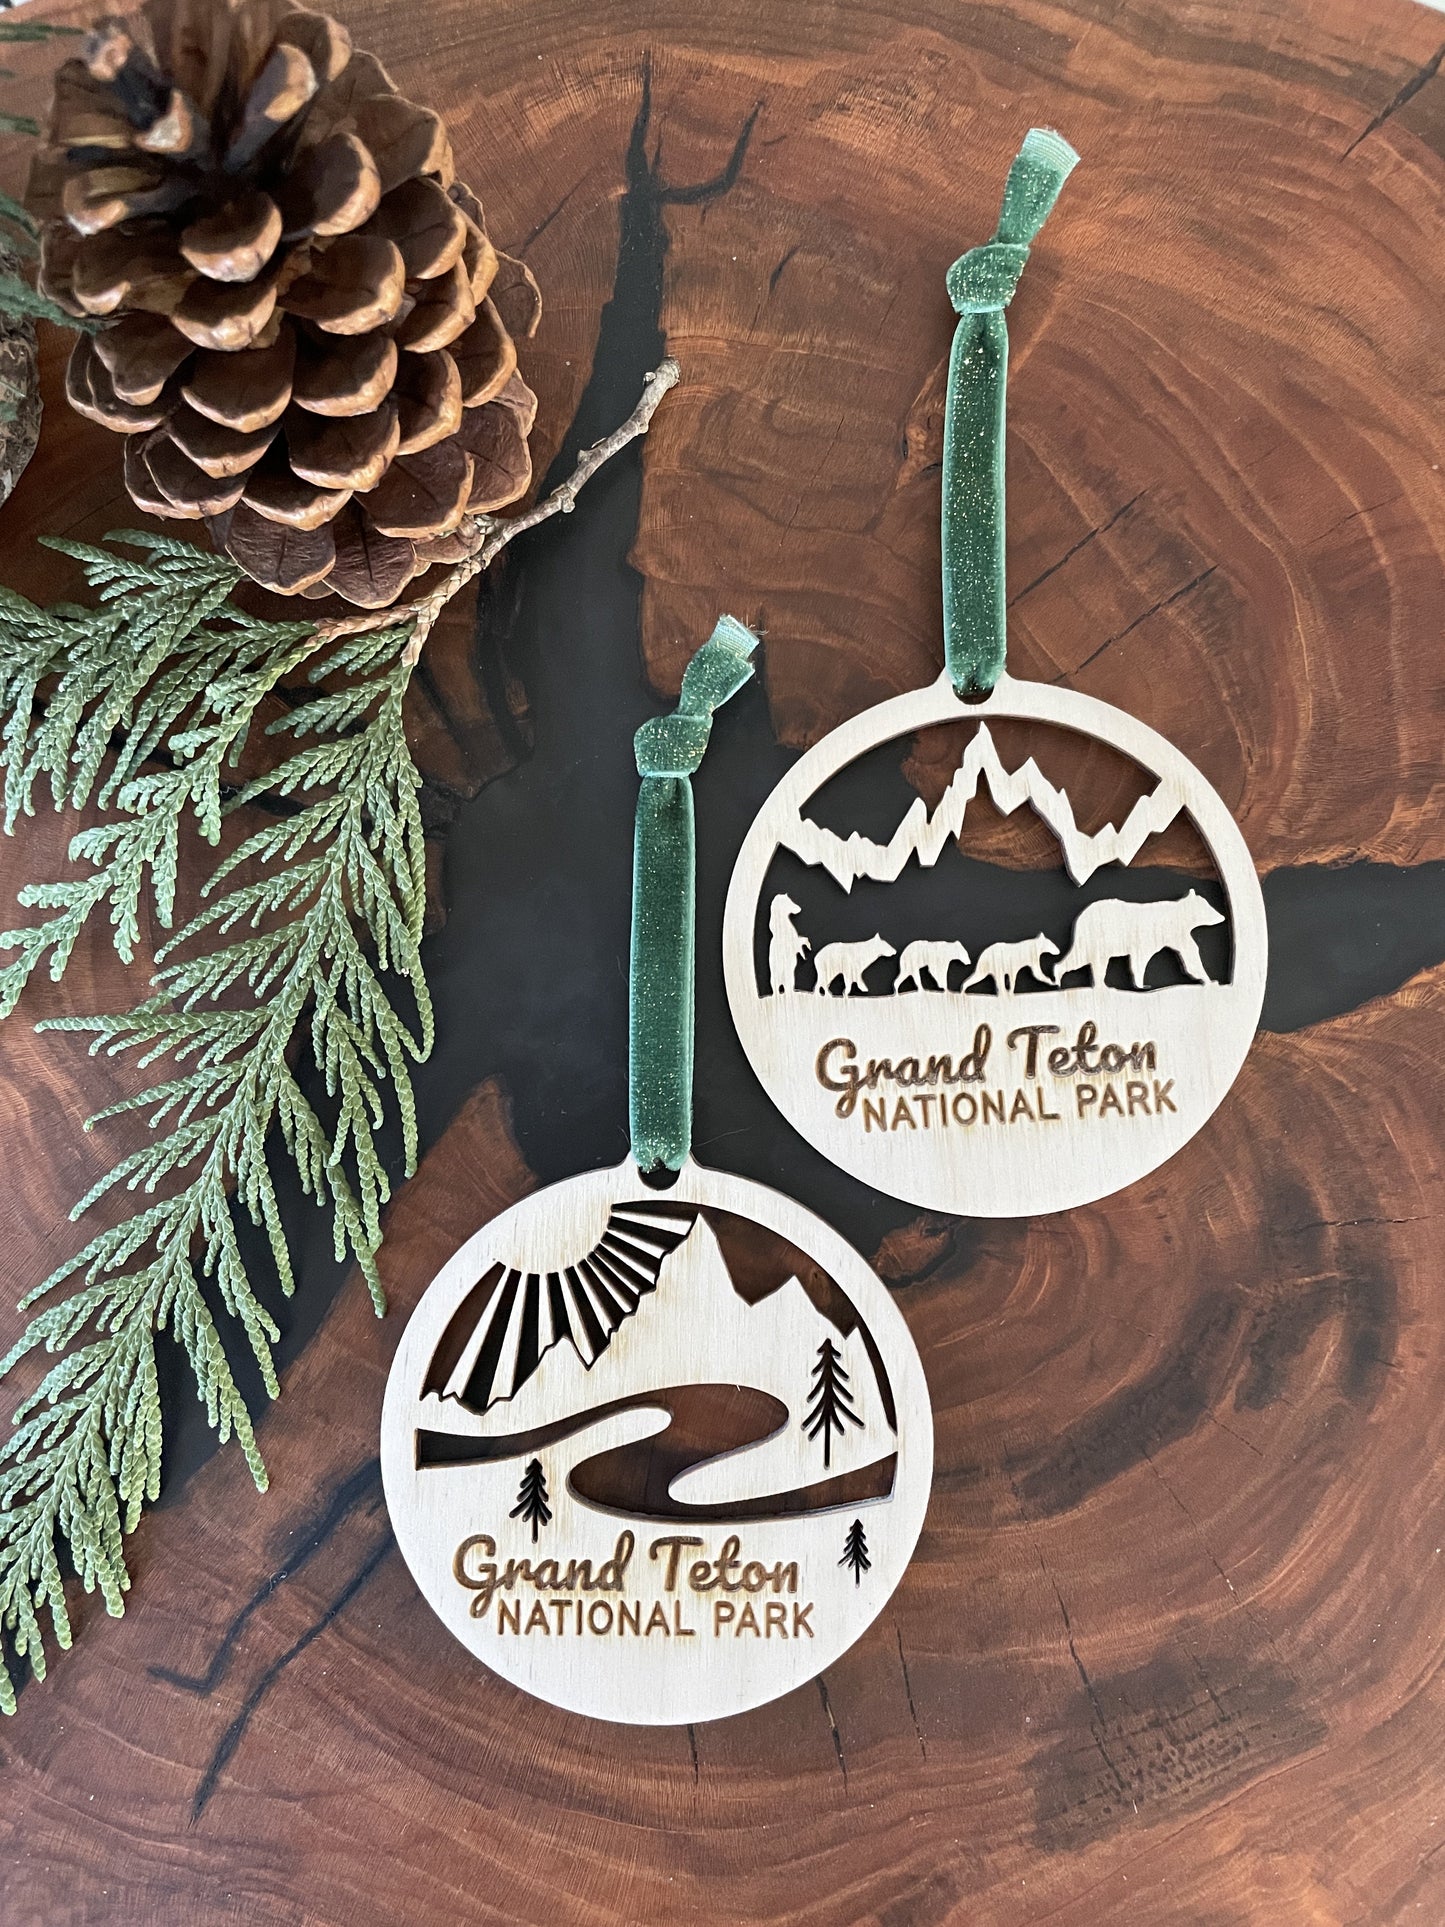 Grizzly Bear 399 Grand Teton National Park Christmas ornament